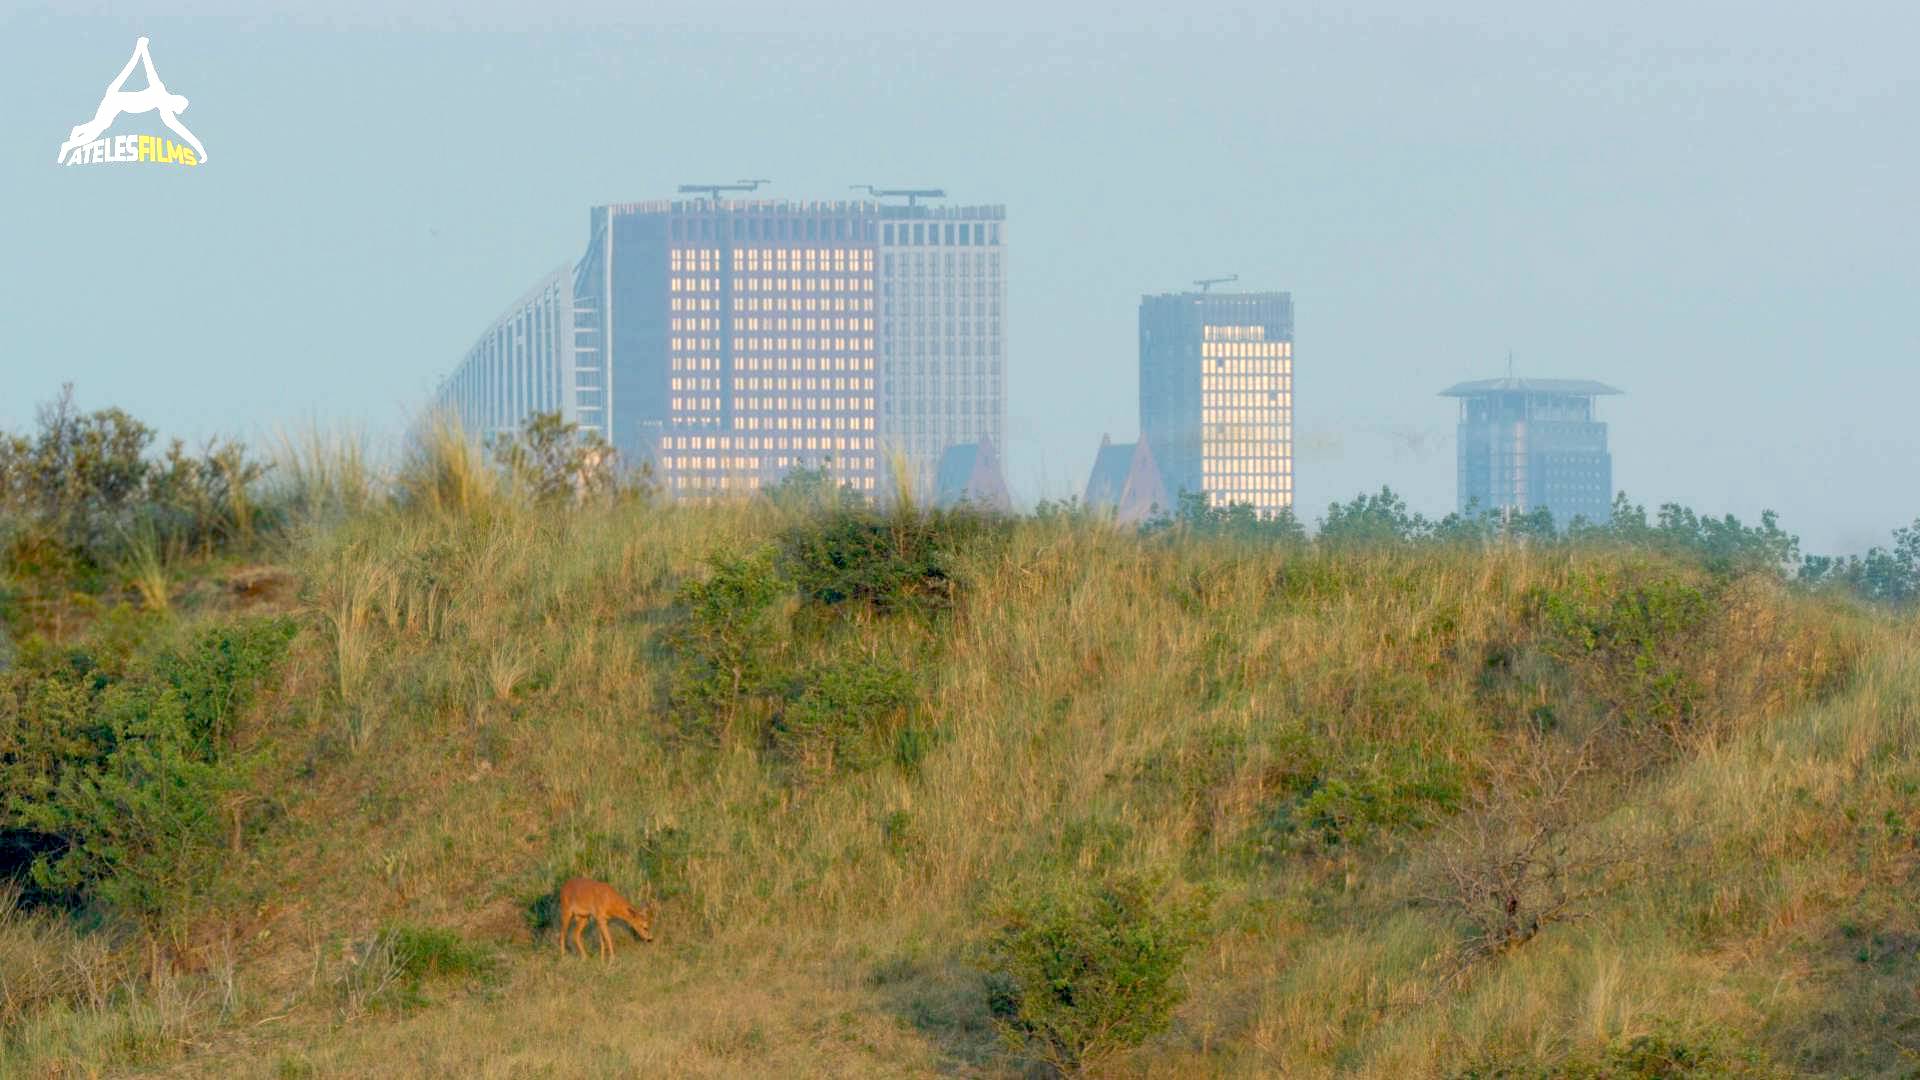 Hollands Wild Dunes - Roe Deer - Ateles Films